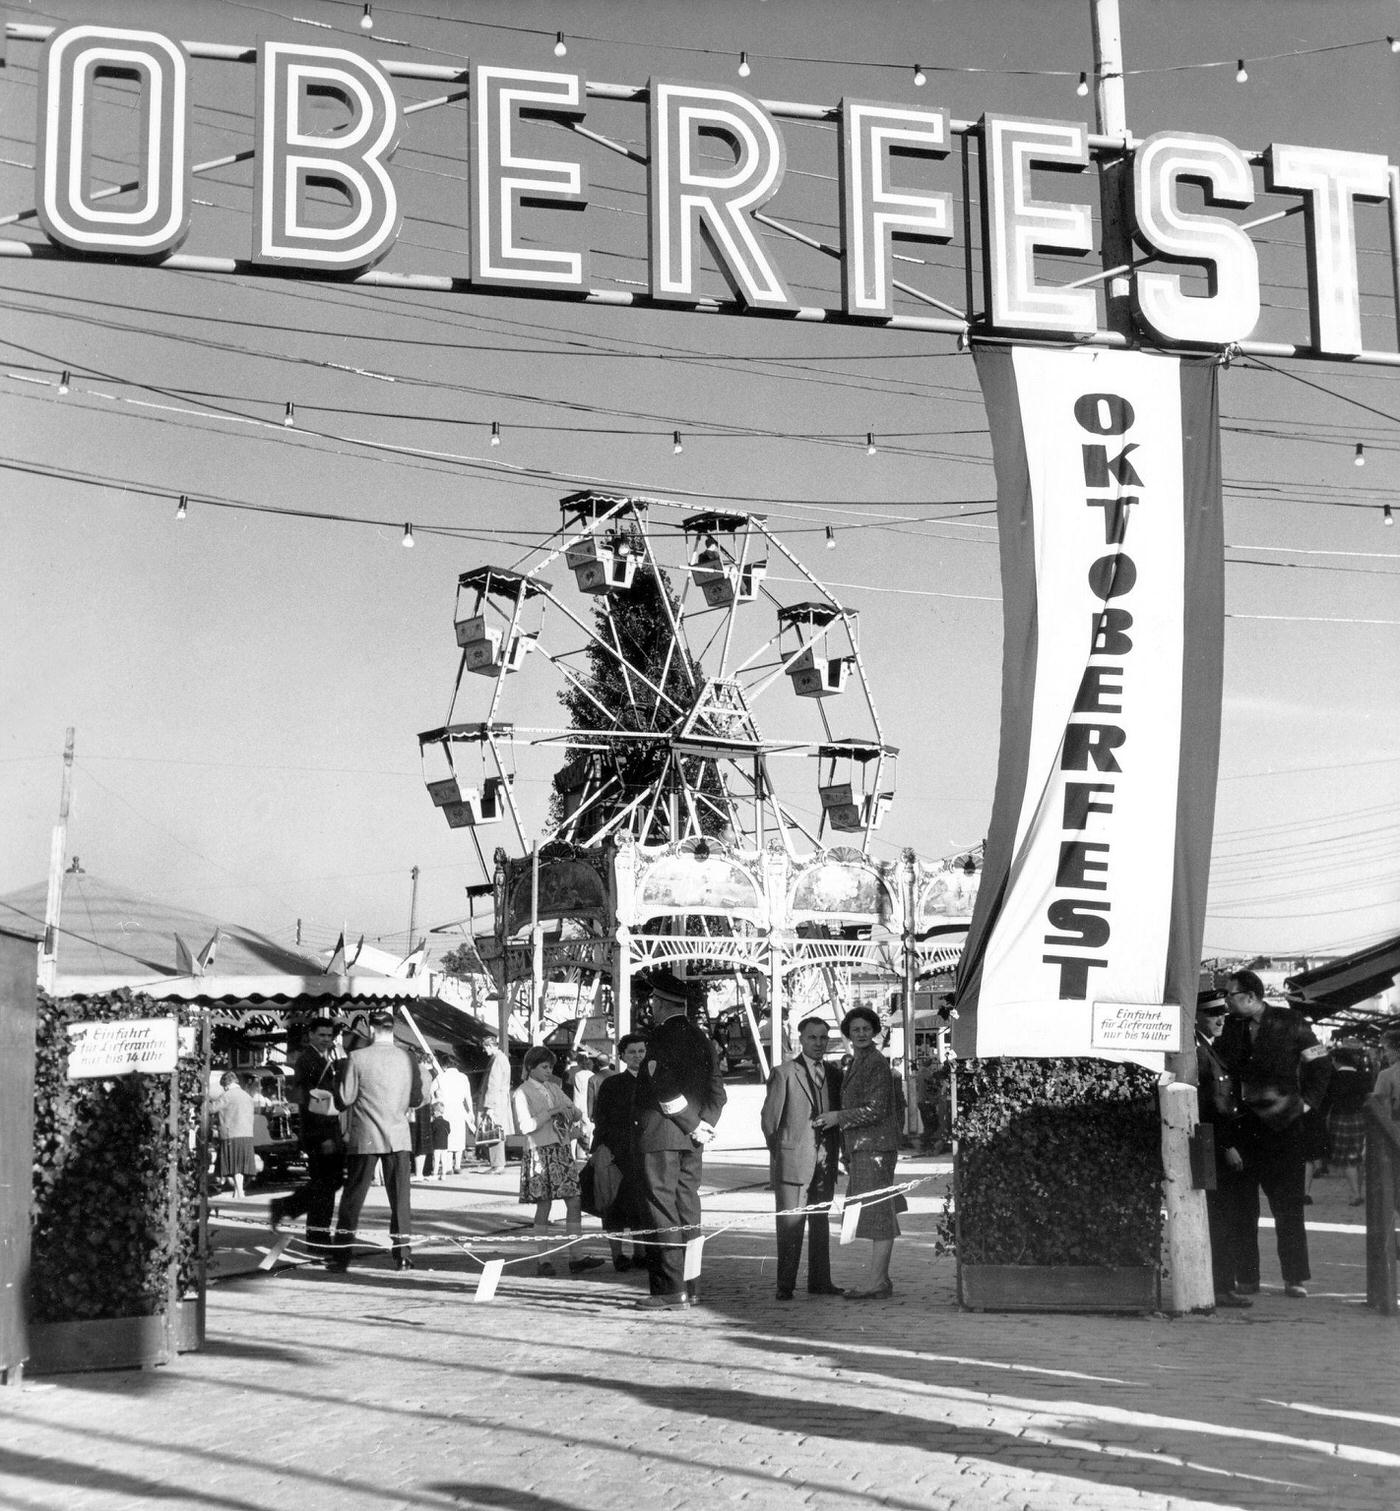 Oktoberfest Berlin, Riesenrad (Giant Wheel). 1960.